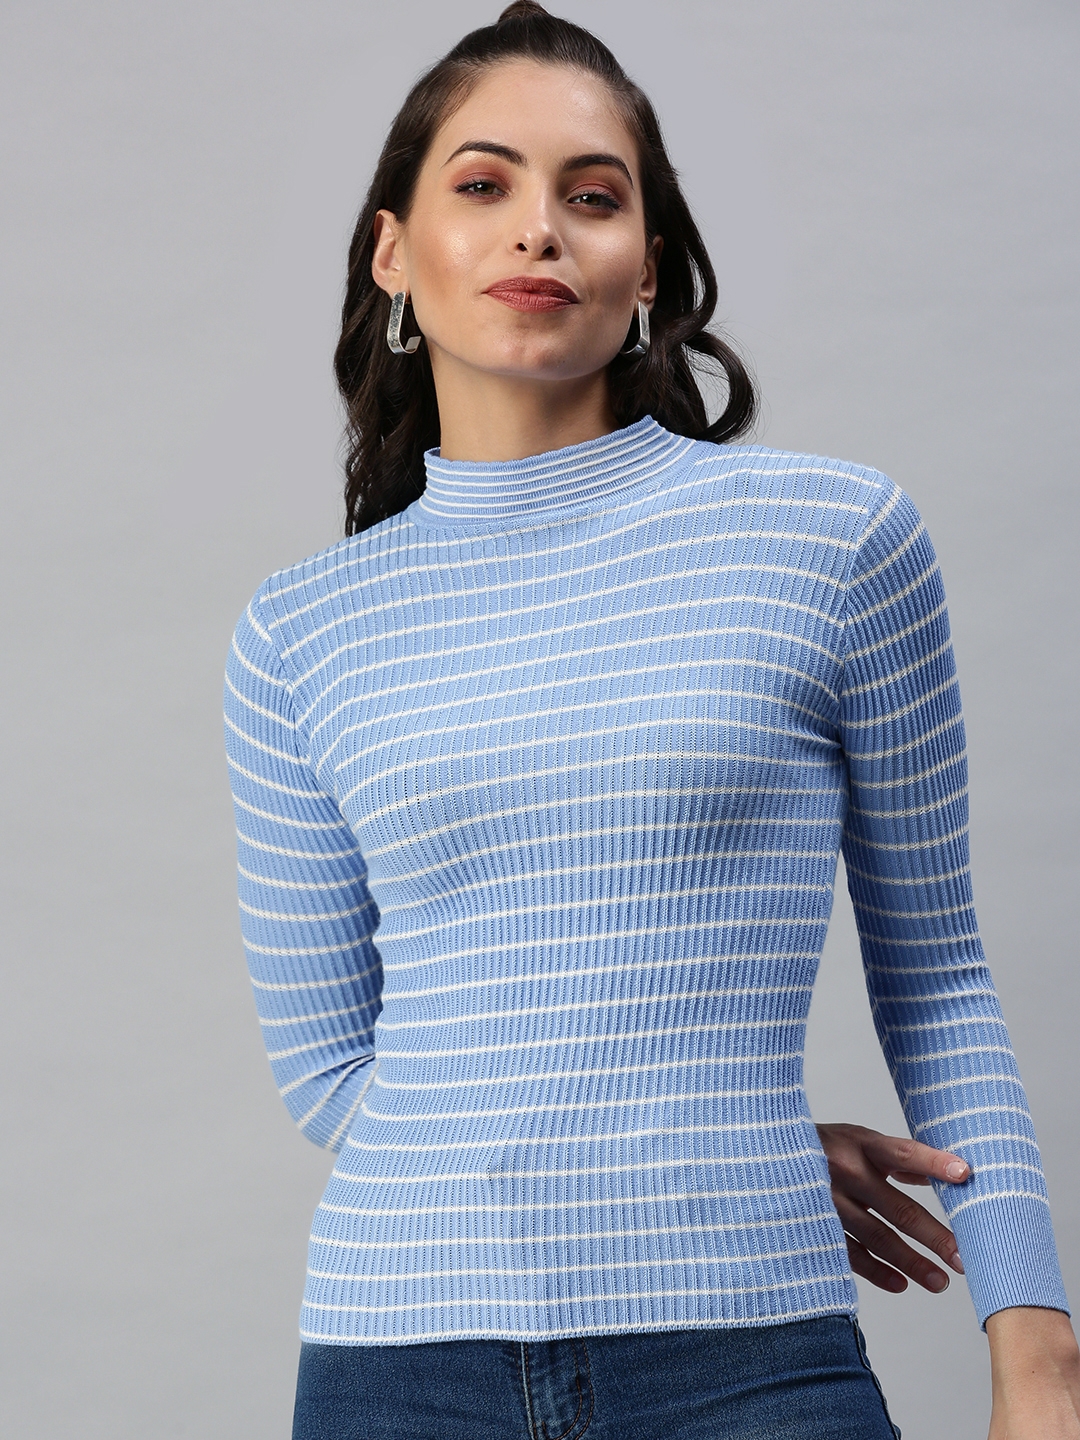 Women's Blue Cotton Blend Striped Tops